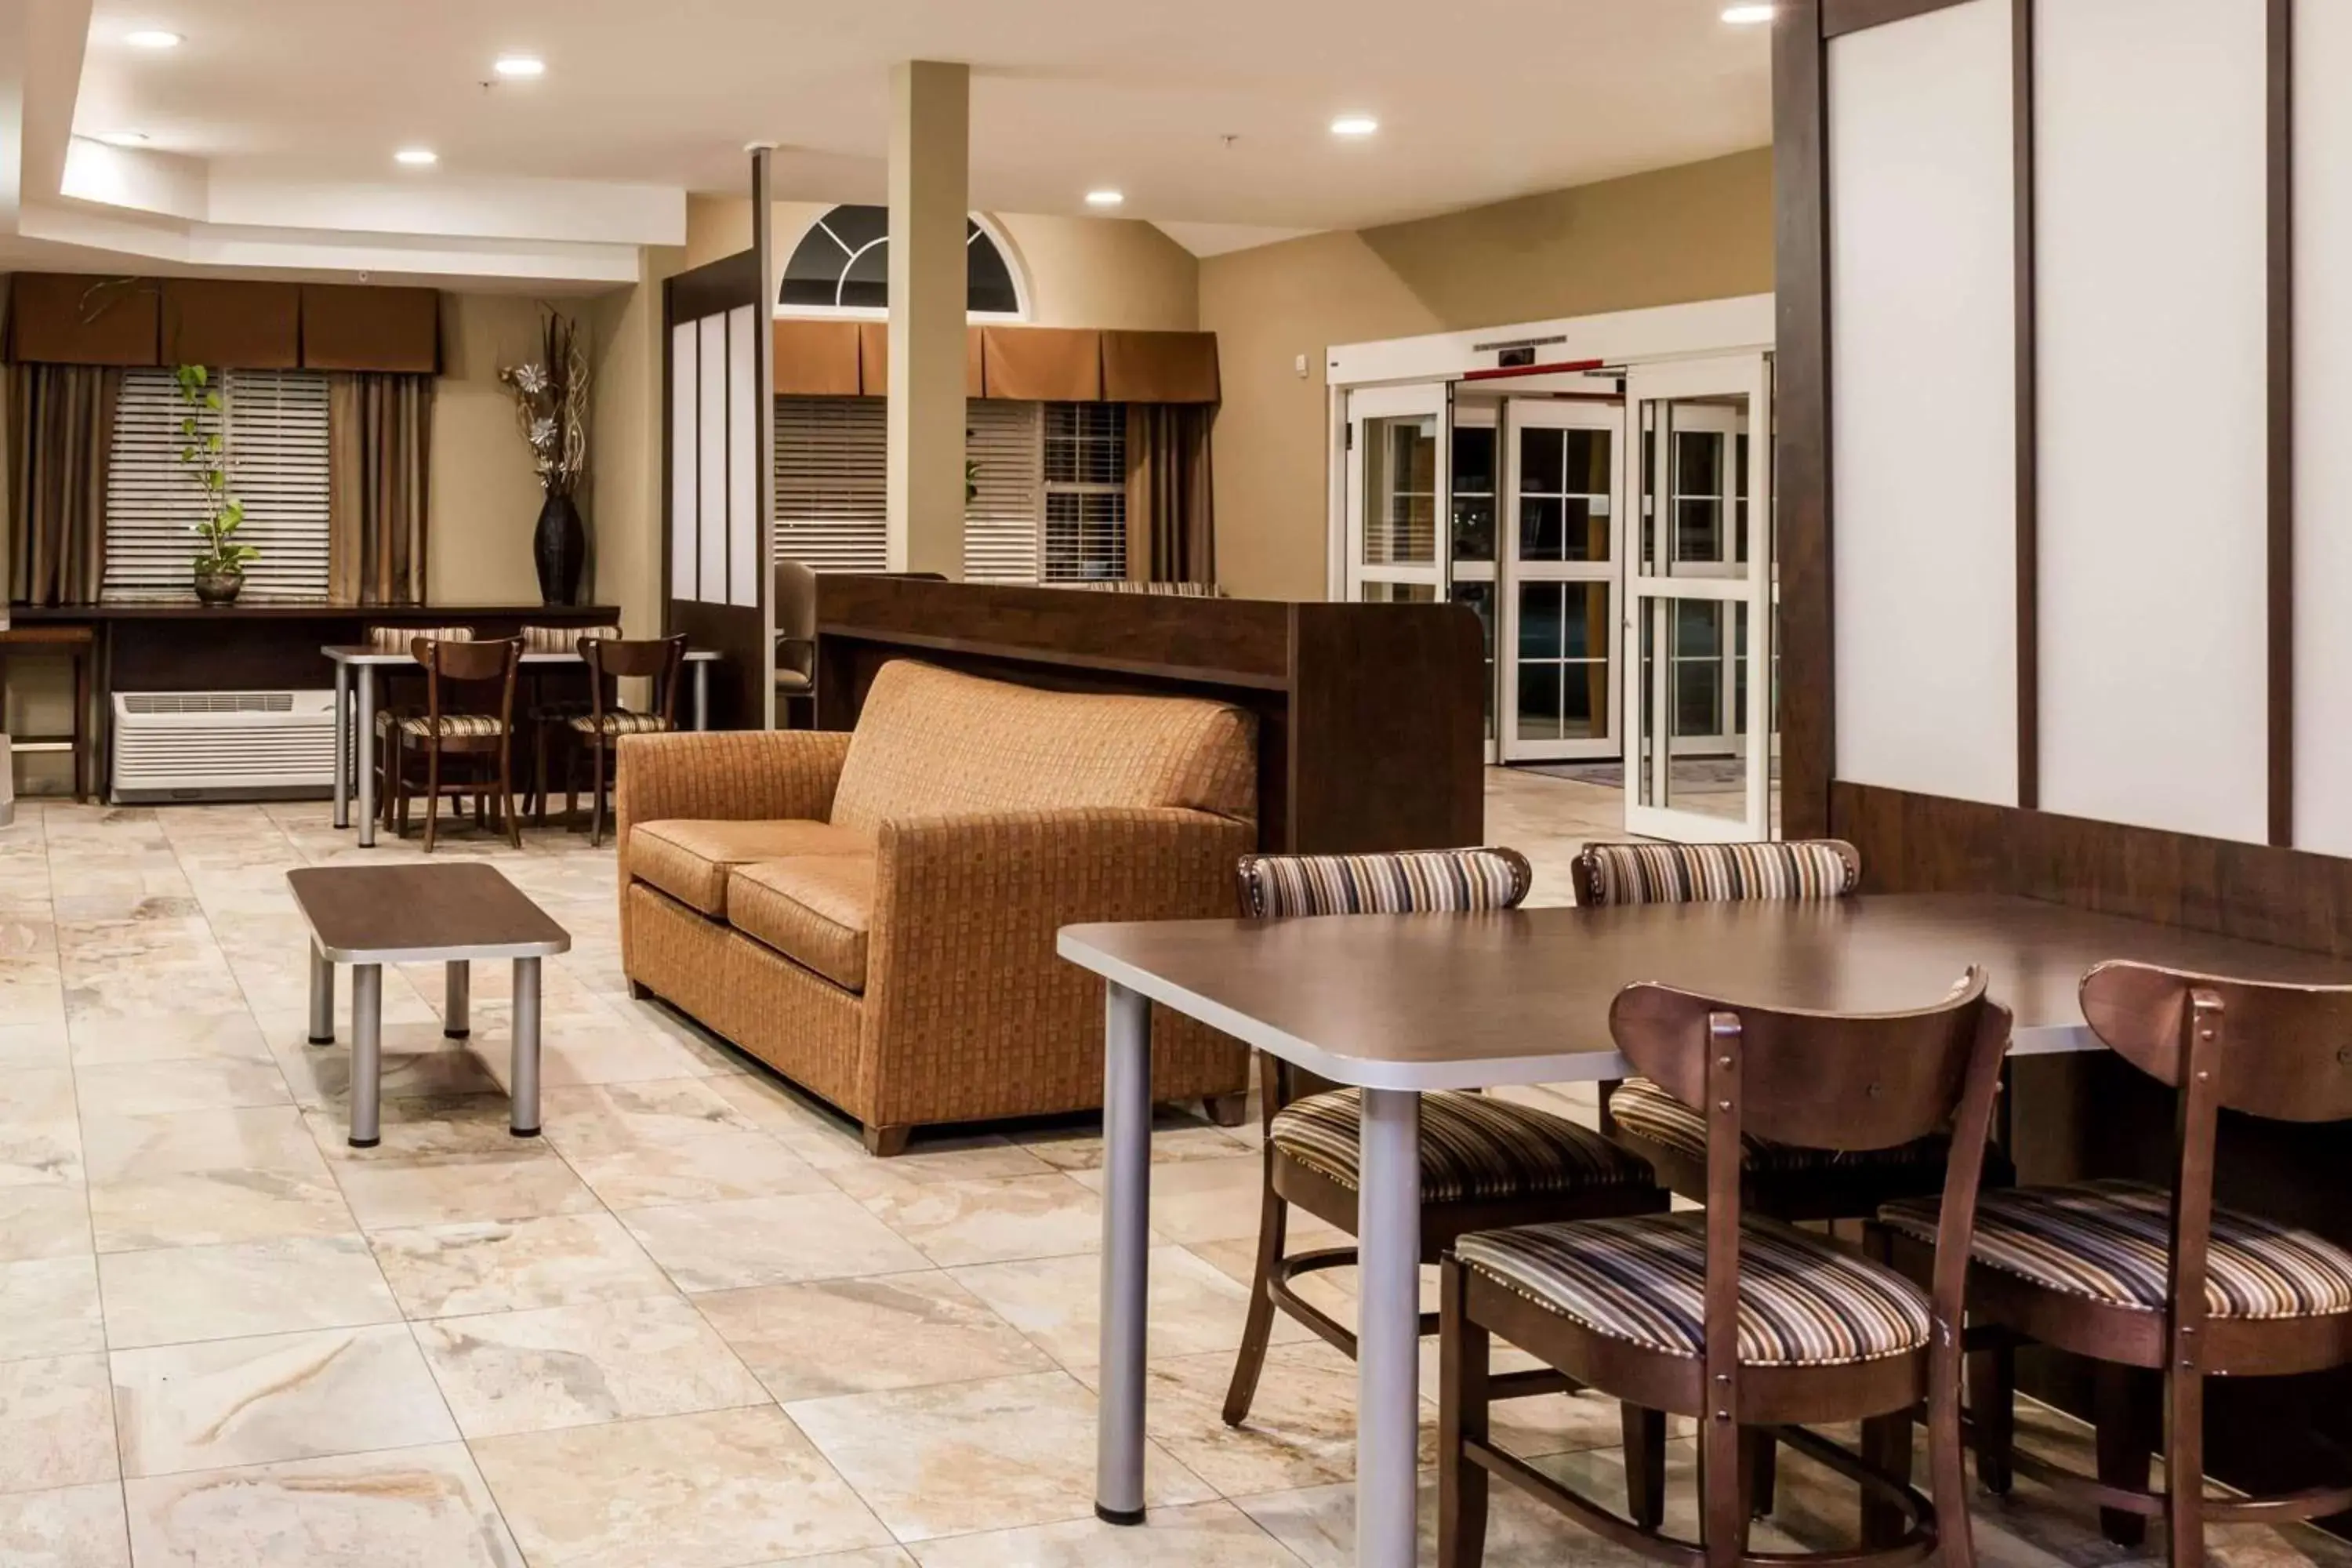 Lobby or reception in Microtel Inn & Suites by Wyndham Wheeler Ridge